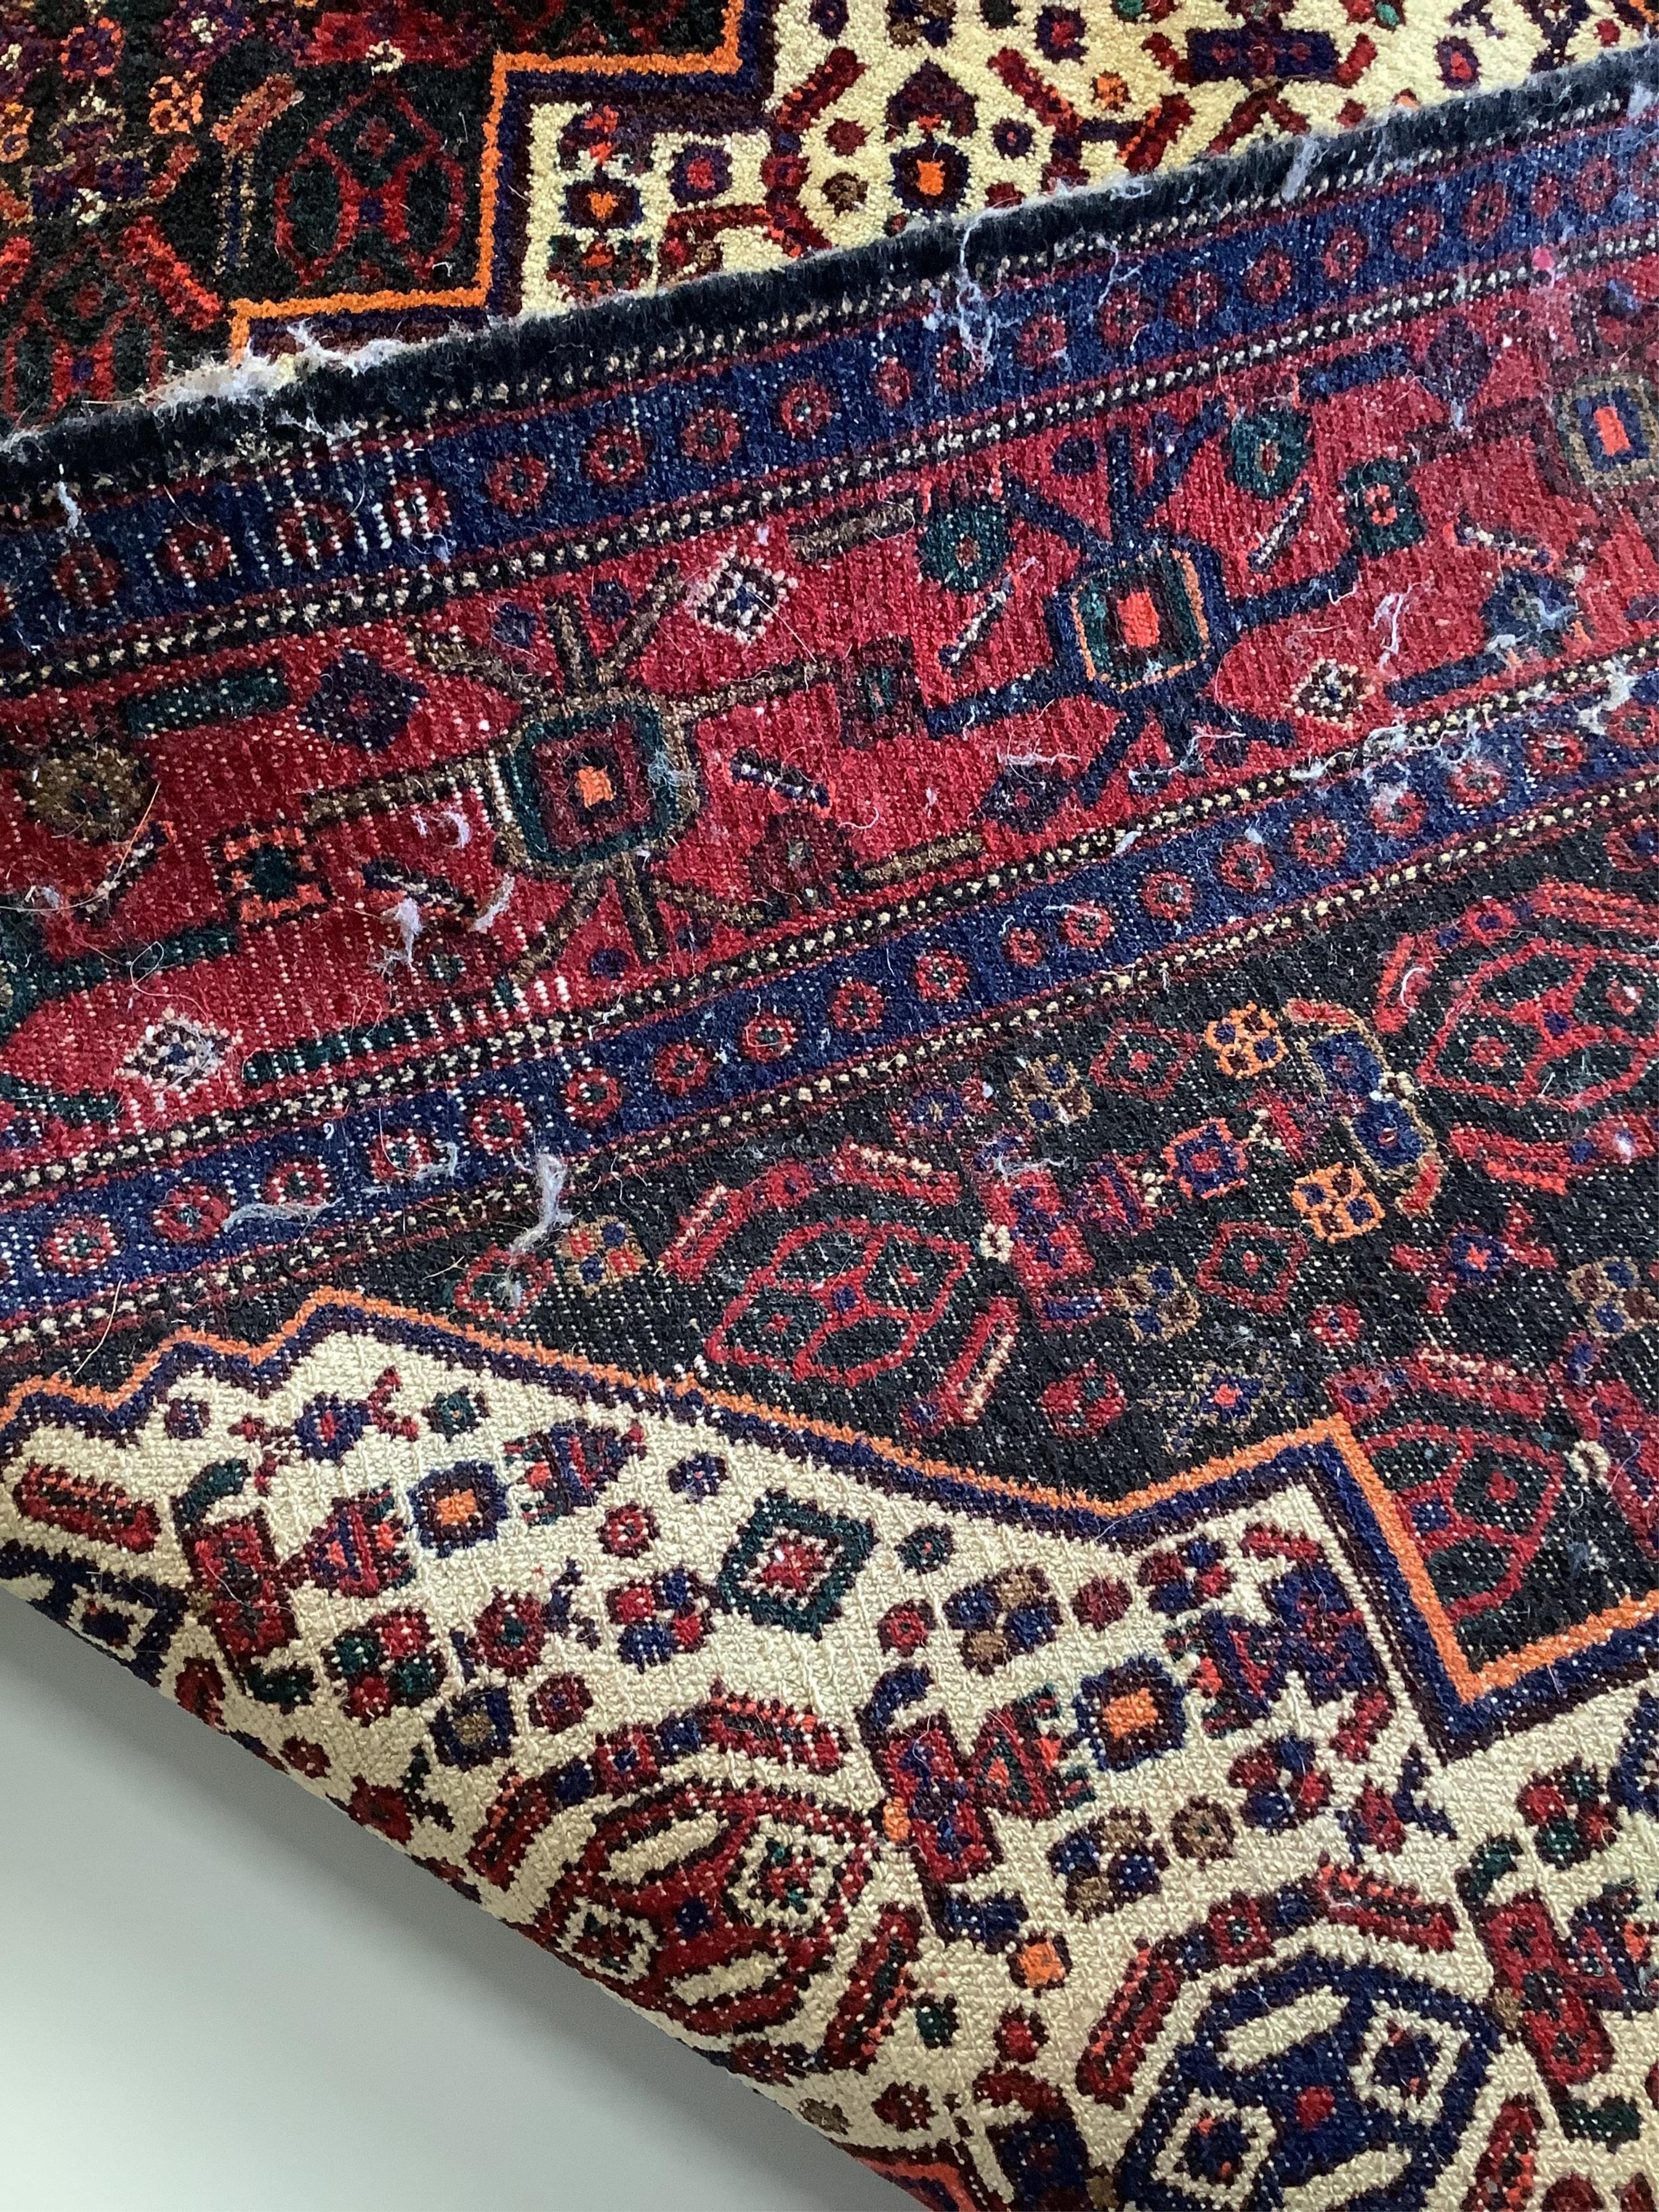 A Shiraz red ground rug, 150 x 120cm. Condition - fair